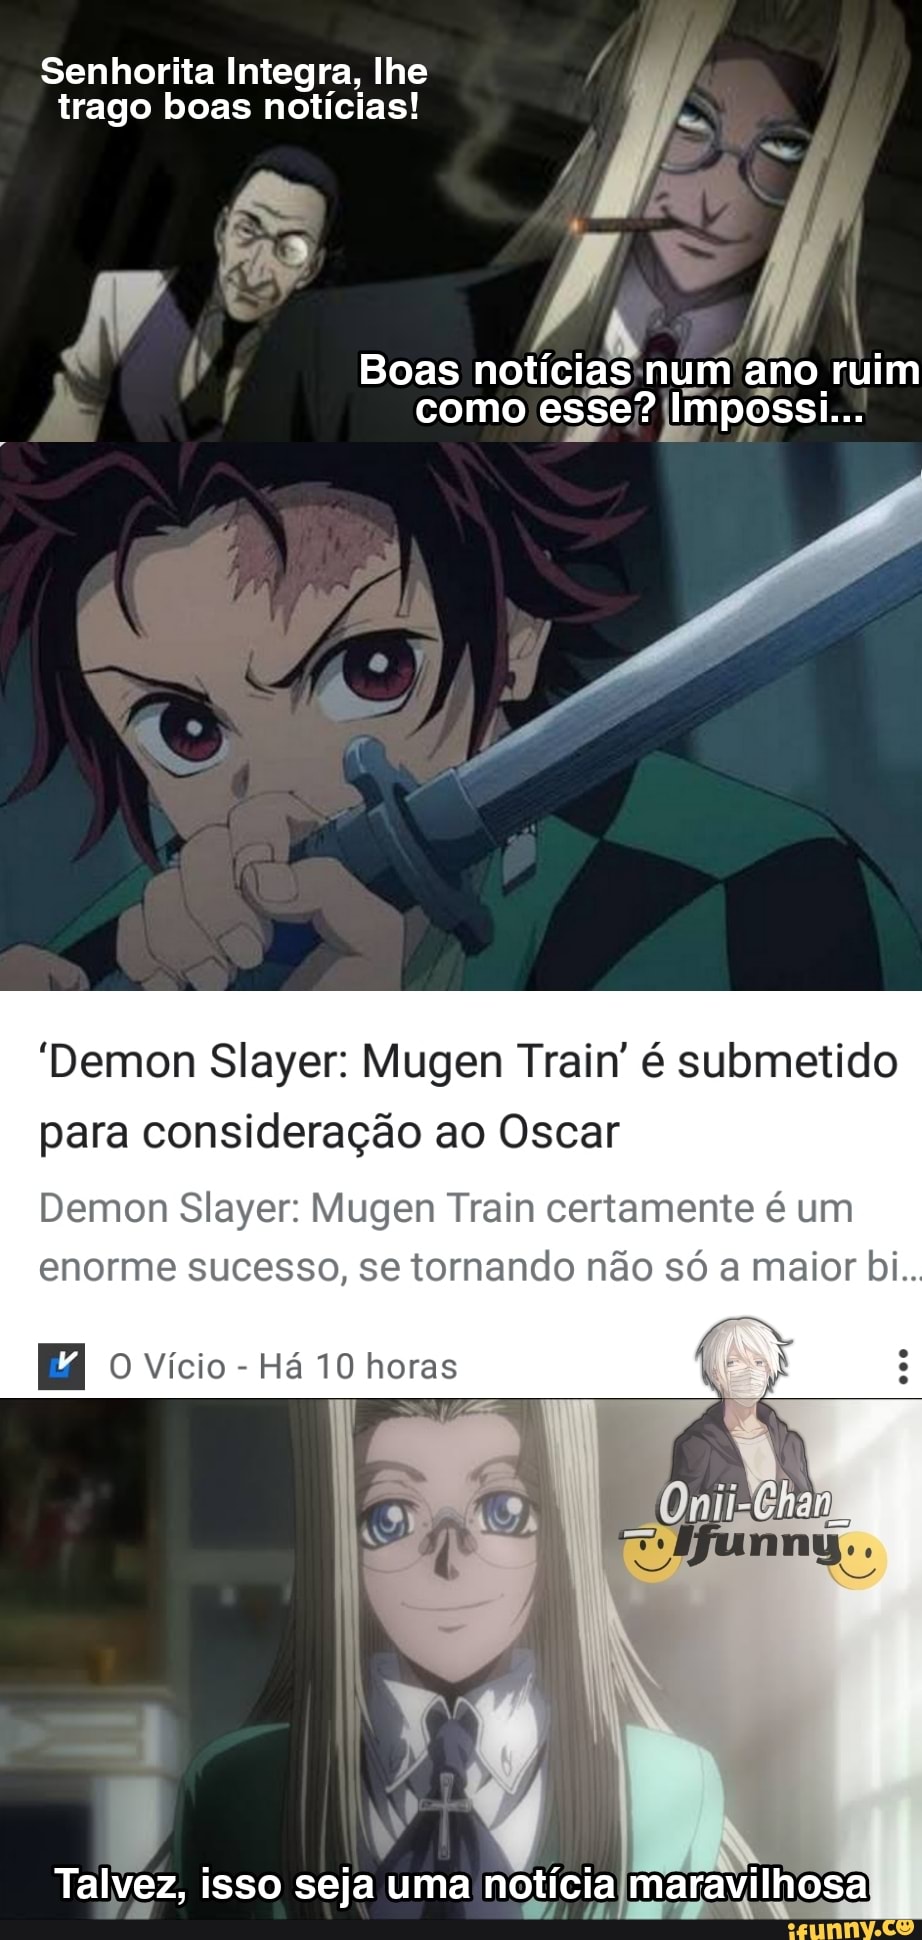 Demon Slayer Mugen Train – Onde assistir o filme de Kimetsu no Yaiba